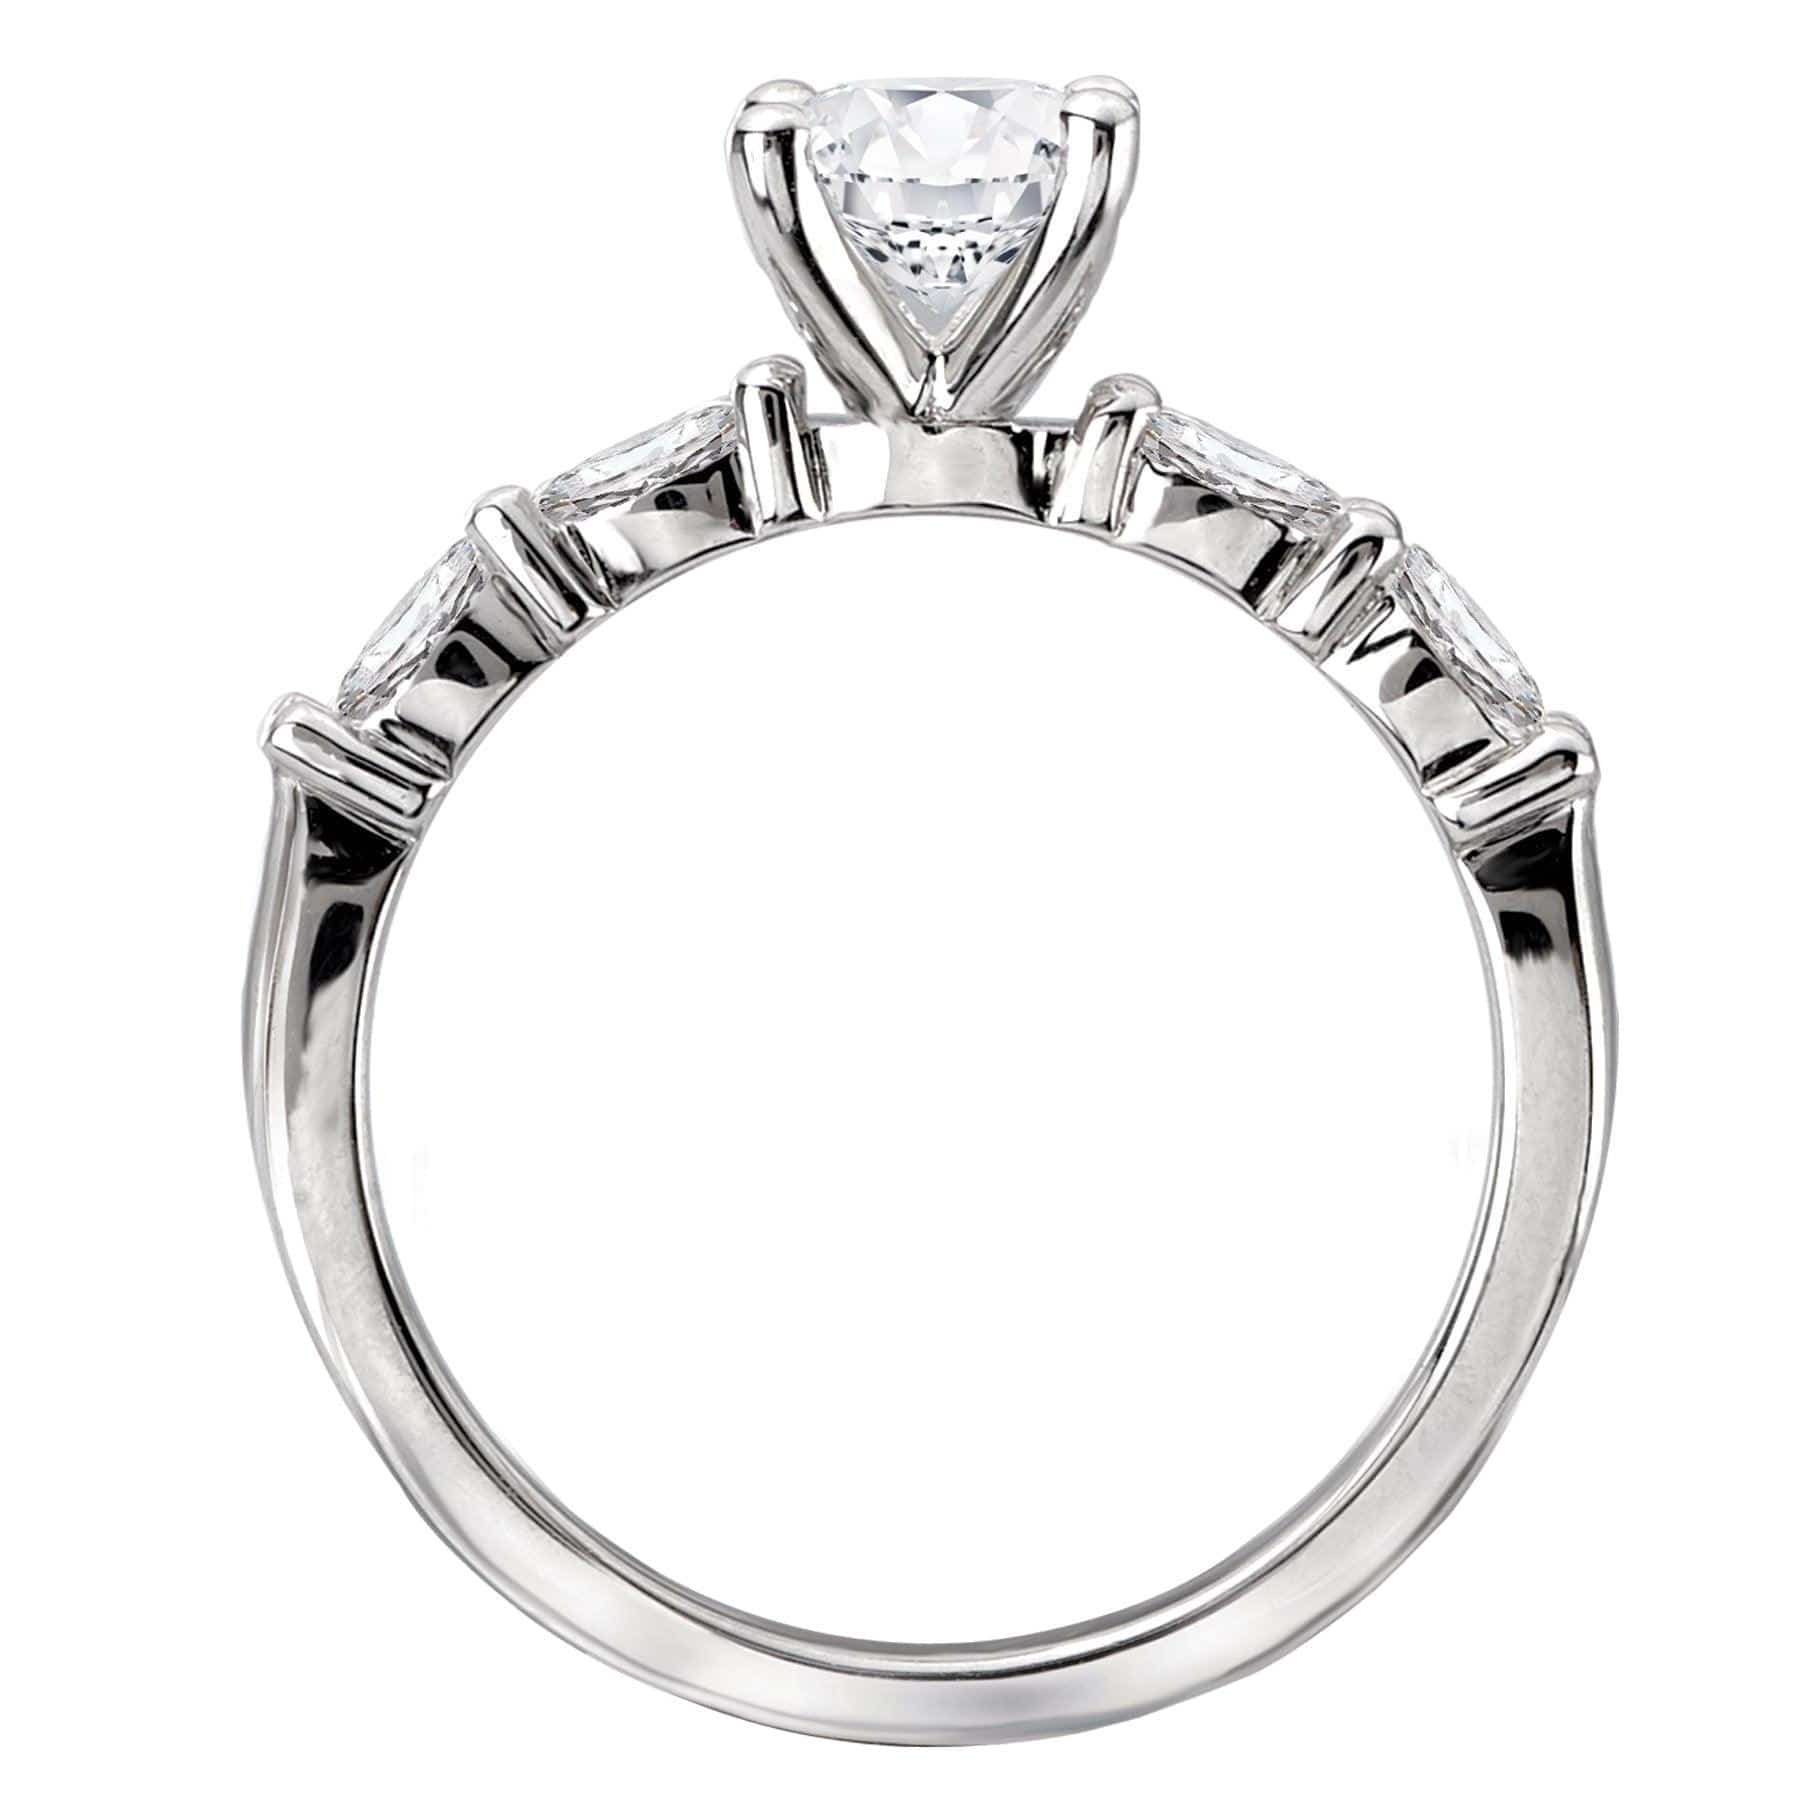 BW JAMES Engagement Rings "The Helena" Classic Semi-Mount Diamond Ring